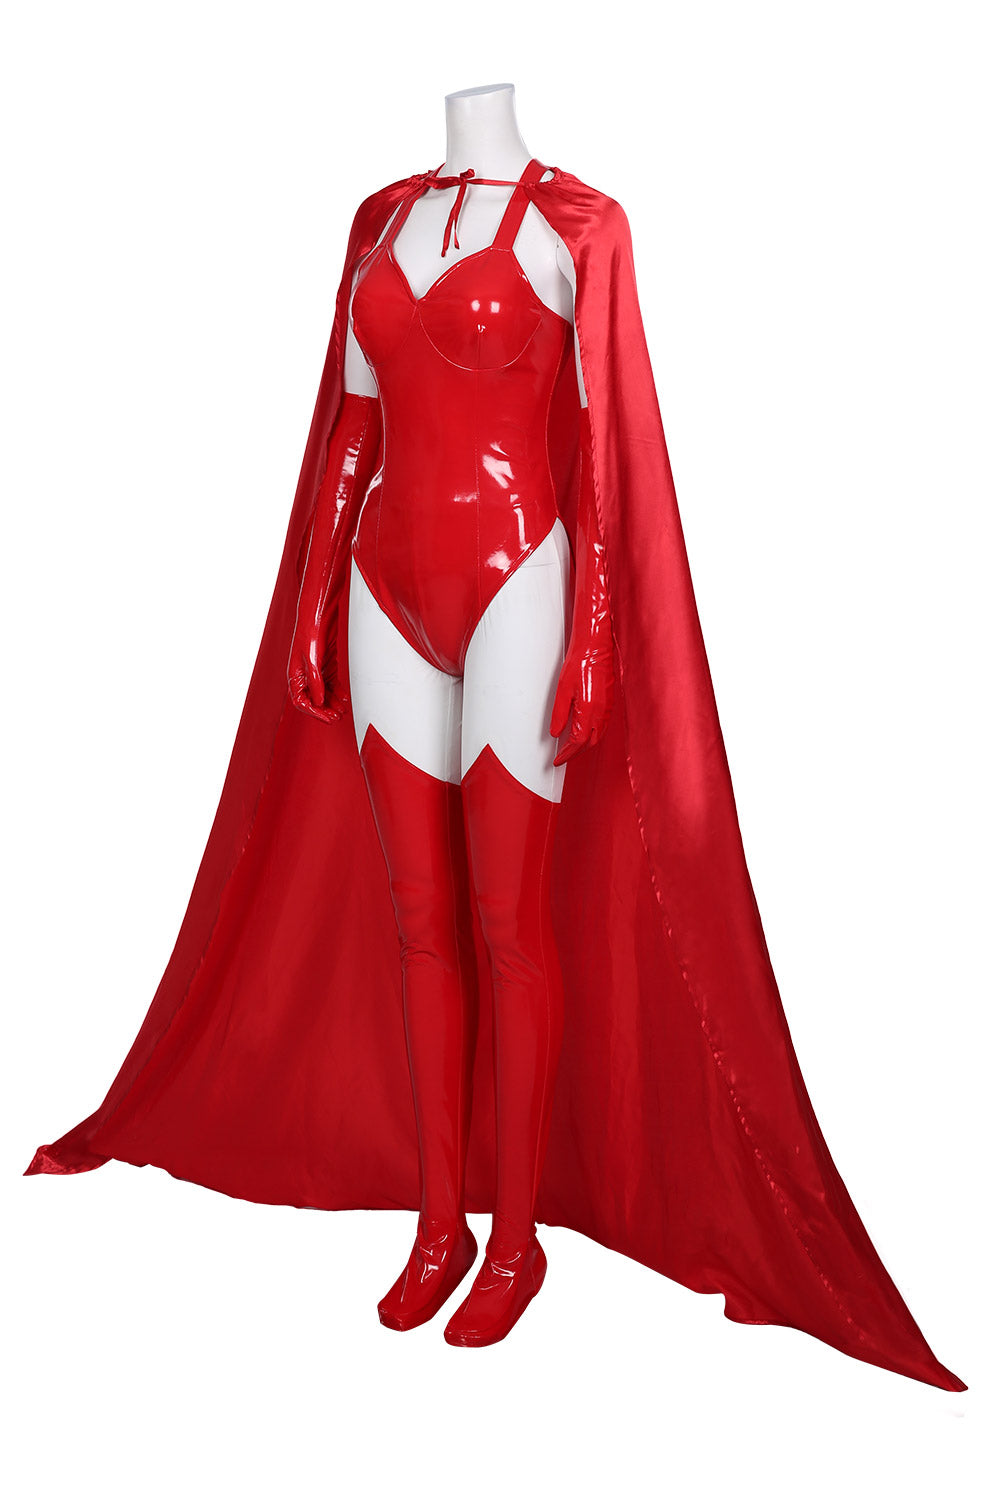 Wanda Vision Sexy Scarlet Witch Wanda Maximoff Cosplay Costume